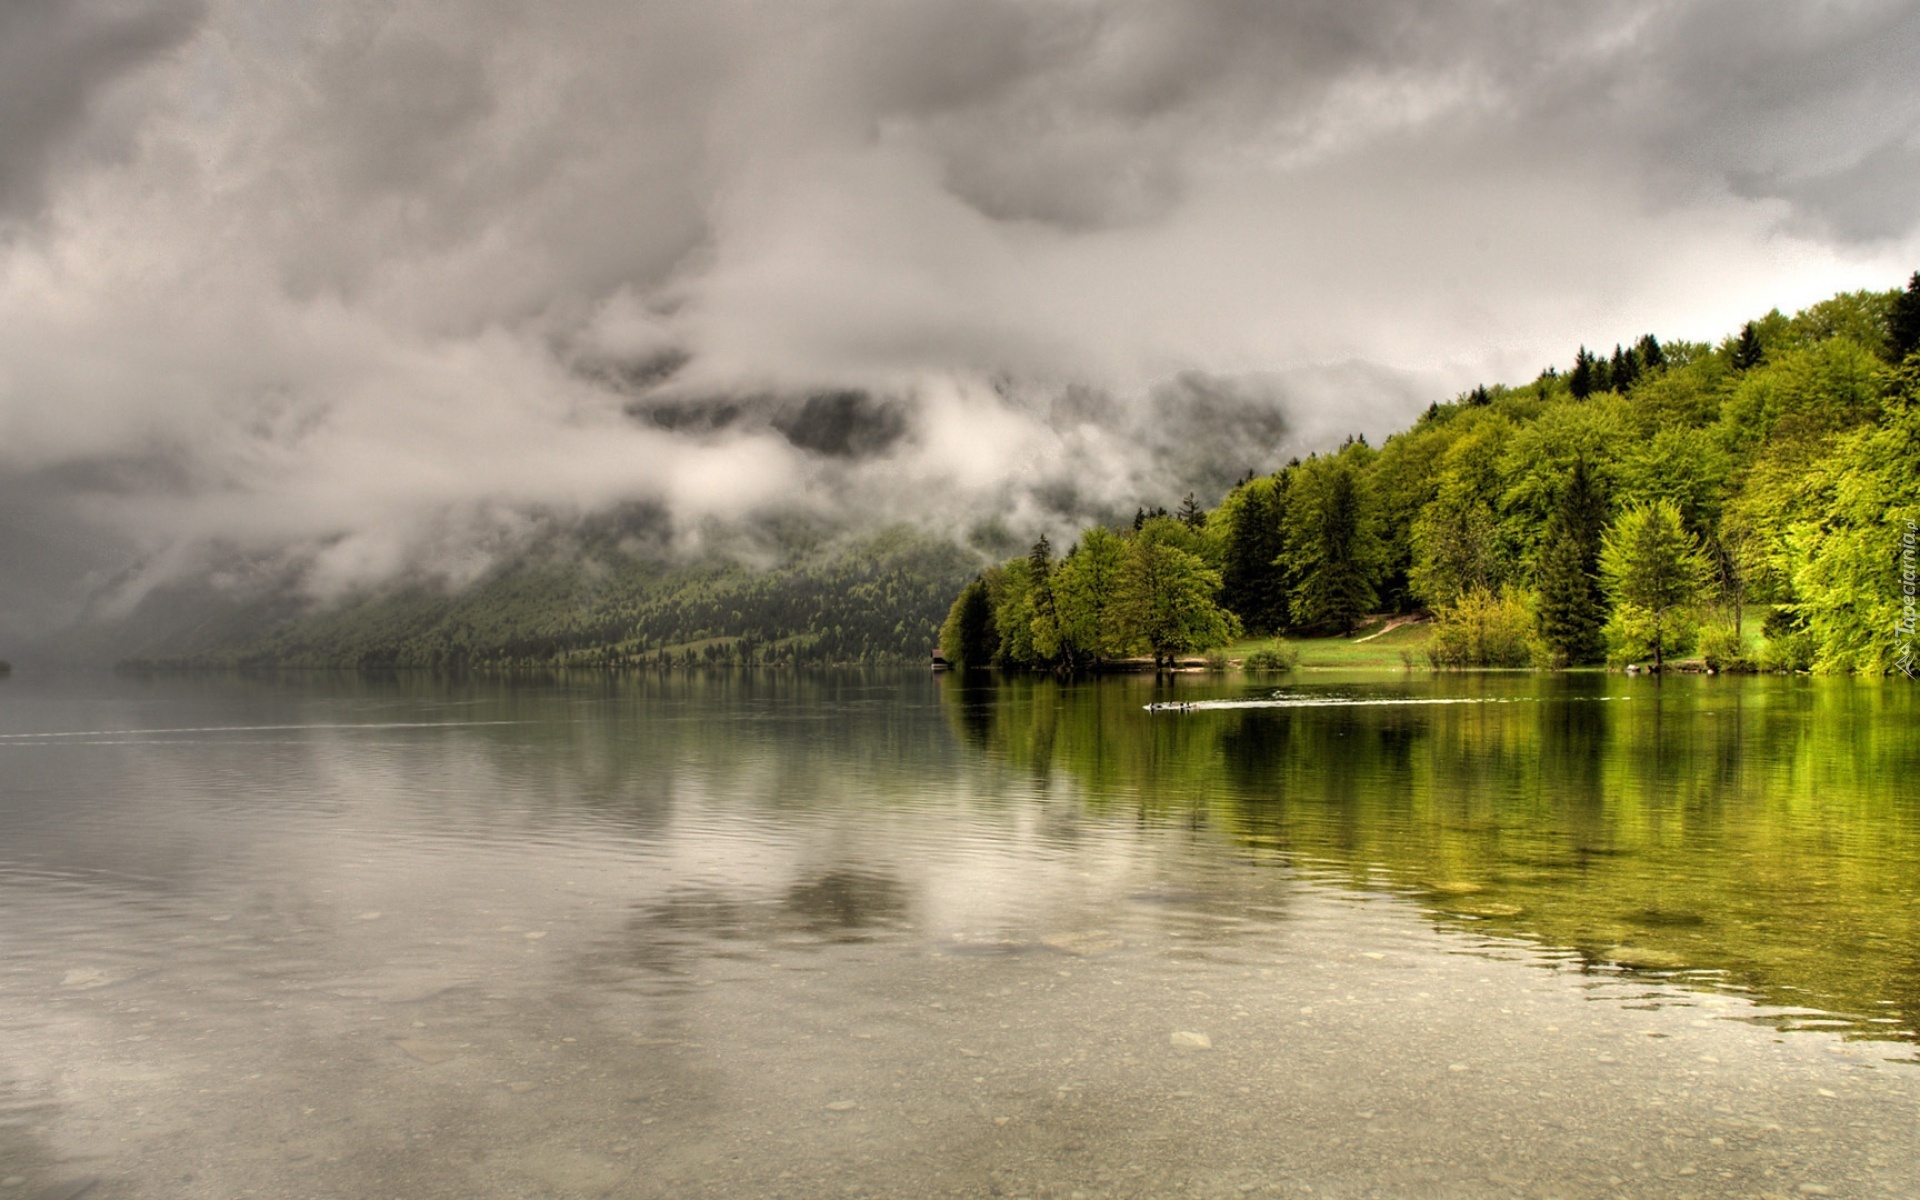 Jezioro, Chmury, Mgła